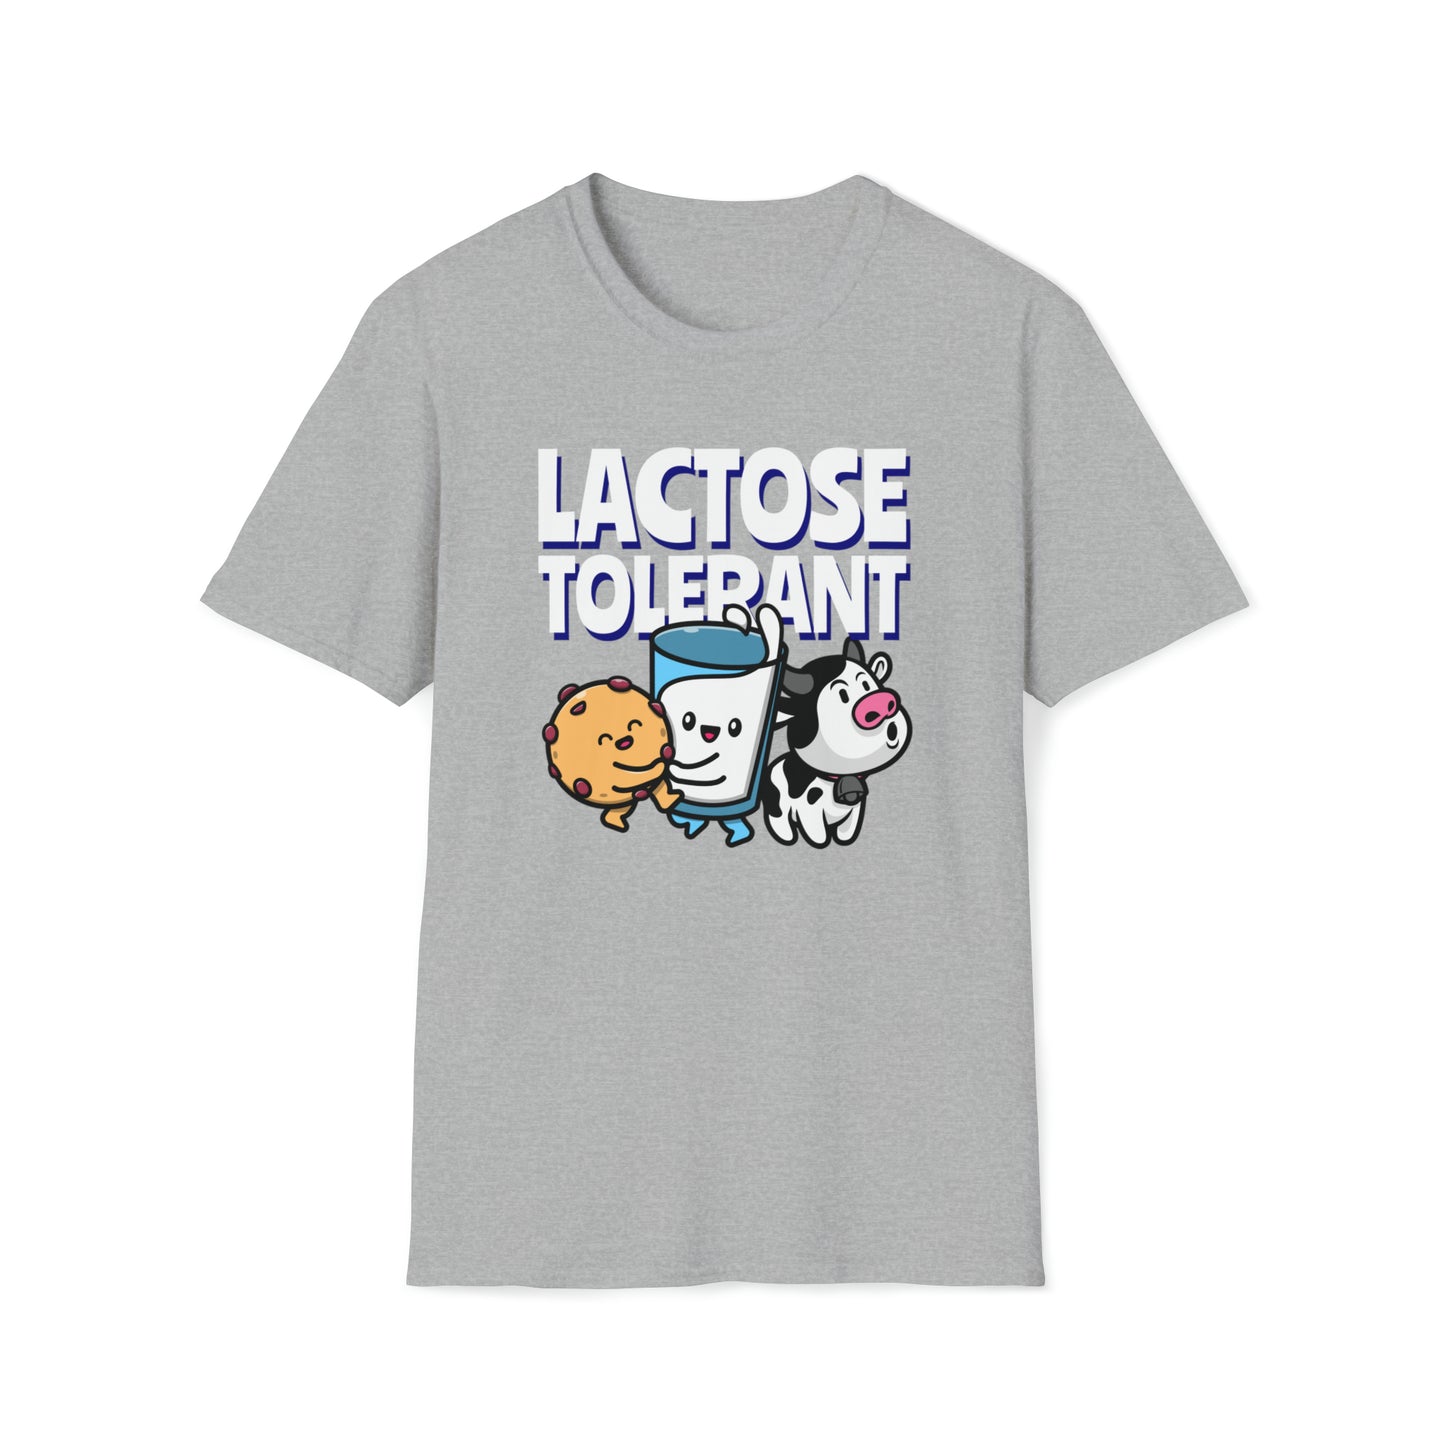 Lactose Tolerant humoristisch T-shirt - Grijs